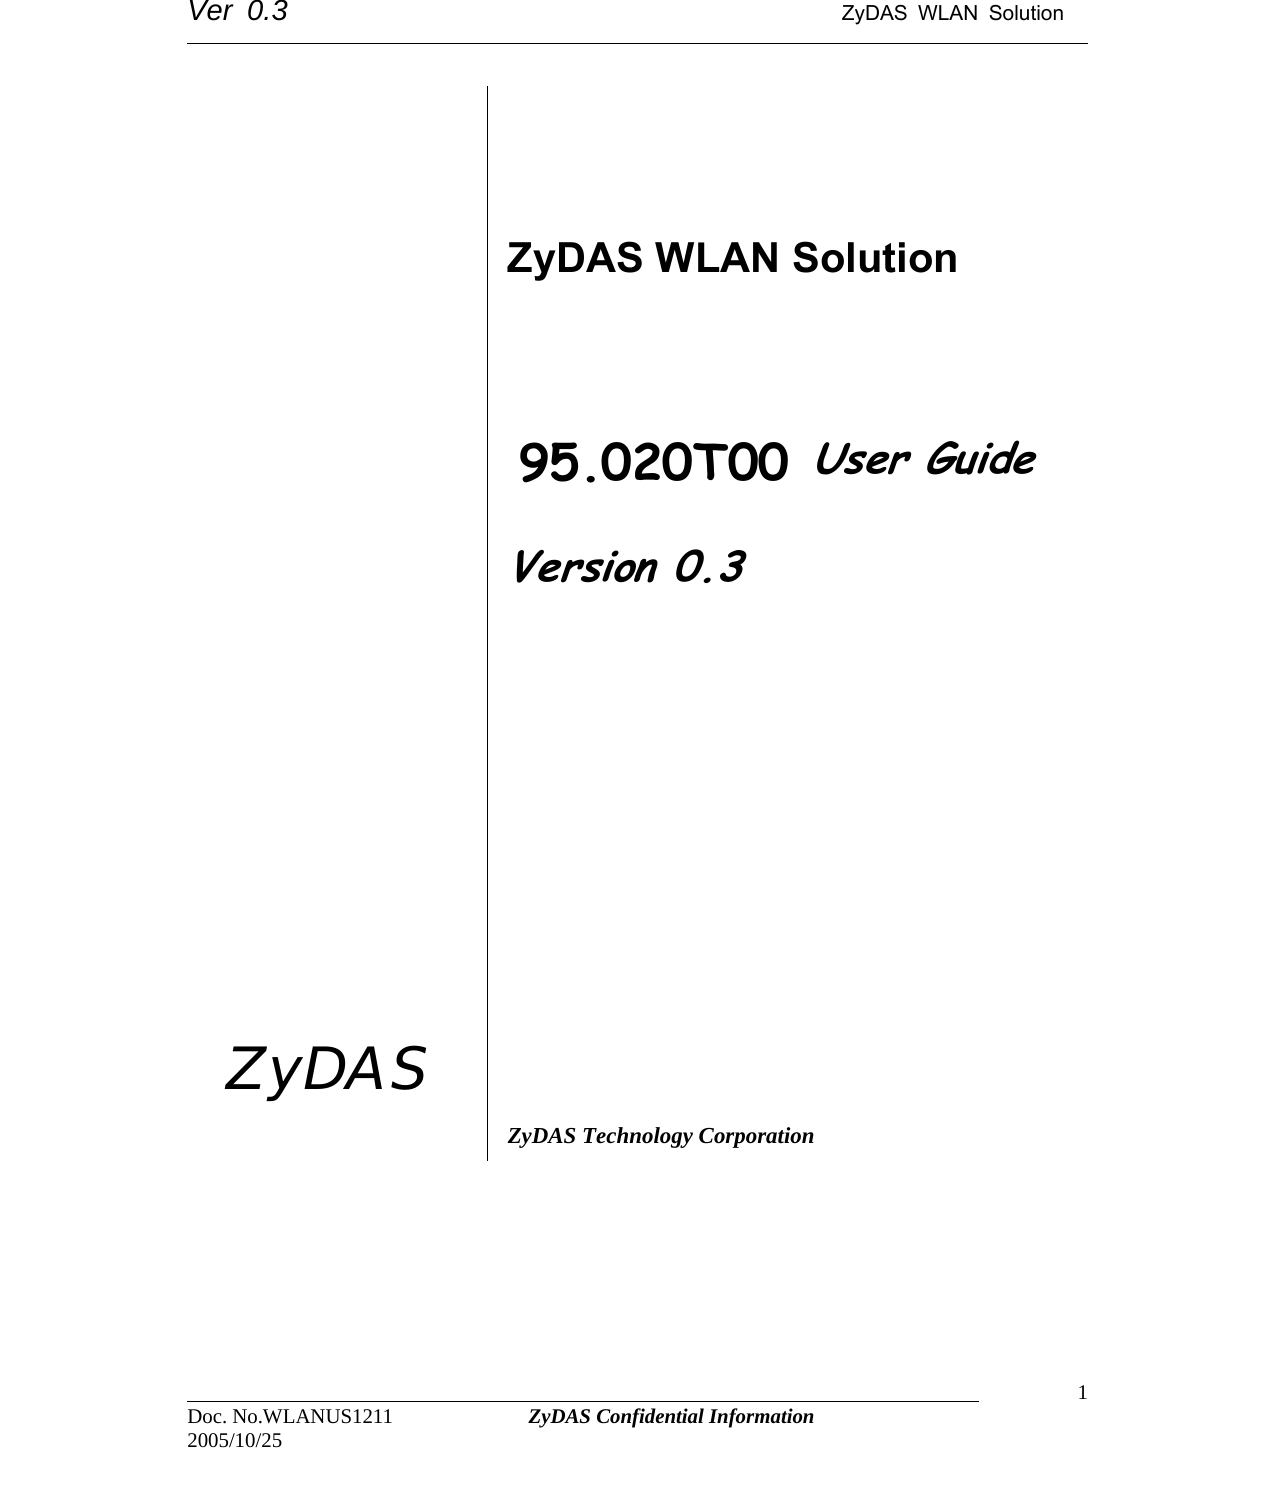 Ver 0.3                                      ZyDAS WLAN Solution                                                                                                                         ZyDAS WLAN Solution     ZDWlan_1211 User Guide Version 0.3       ZyDAS    ZyDAS Technology Corporation                                                                                    Doc. No.WLANUS1211             ZyDAS Confidential Information                   1 2005/10/25  95.020T00